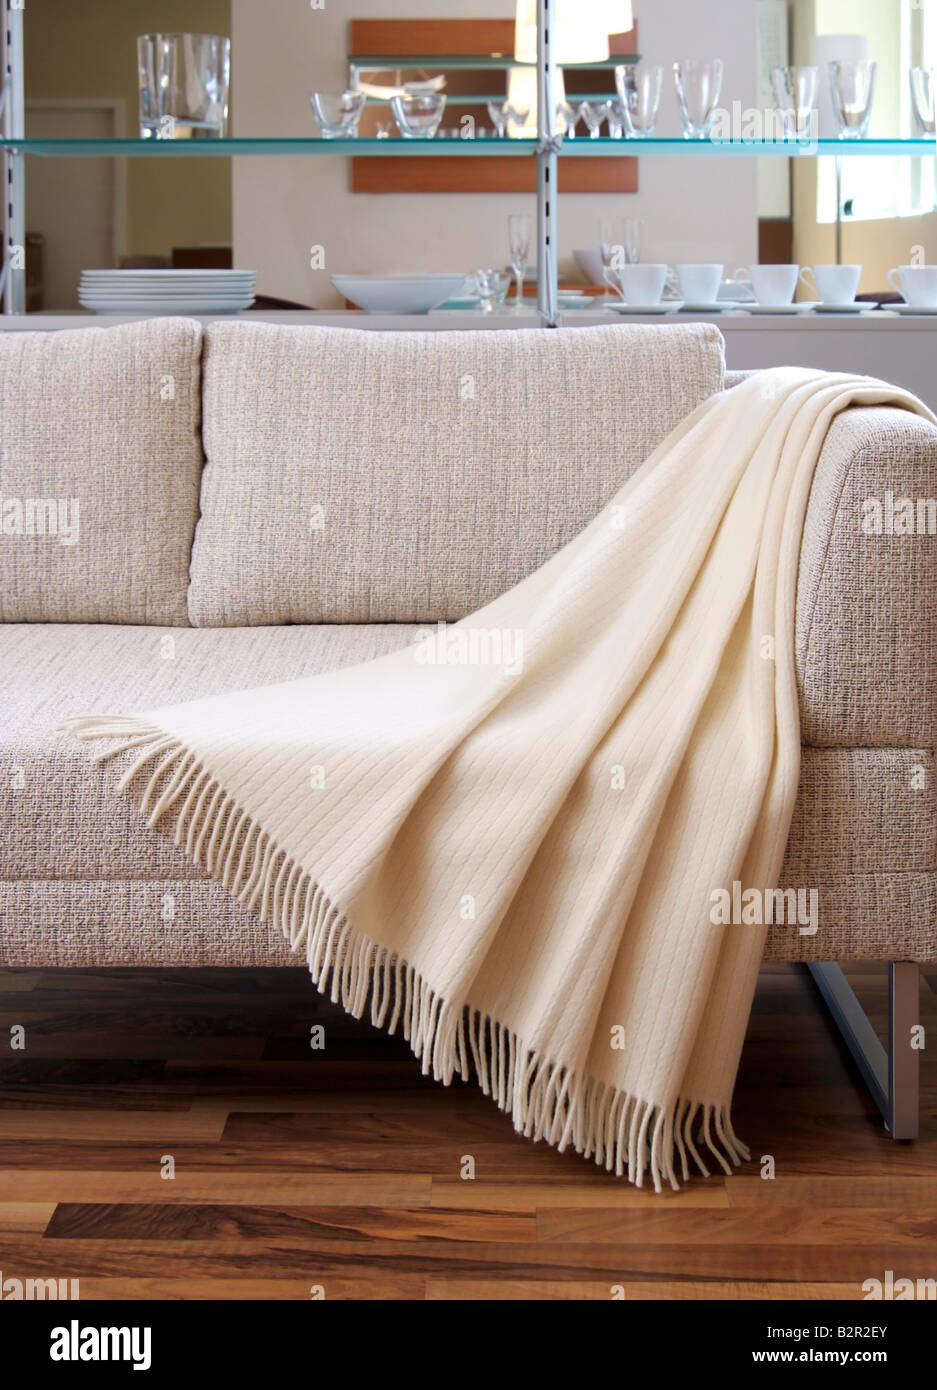 Una coperta stesa sul divano Foto stock - Alamy